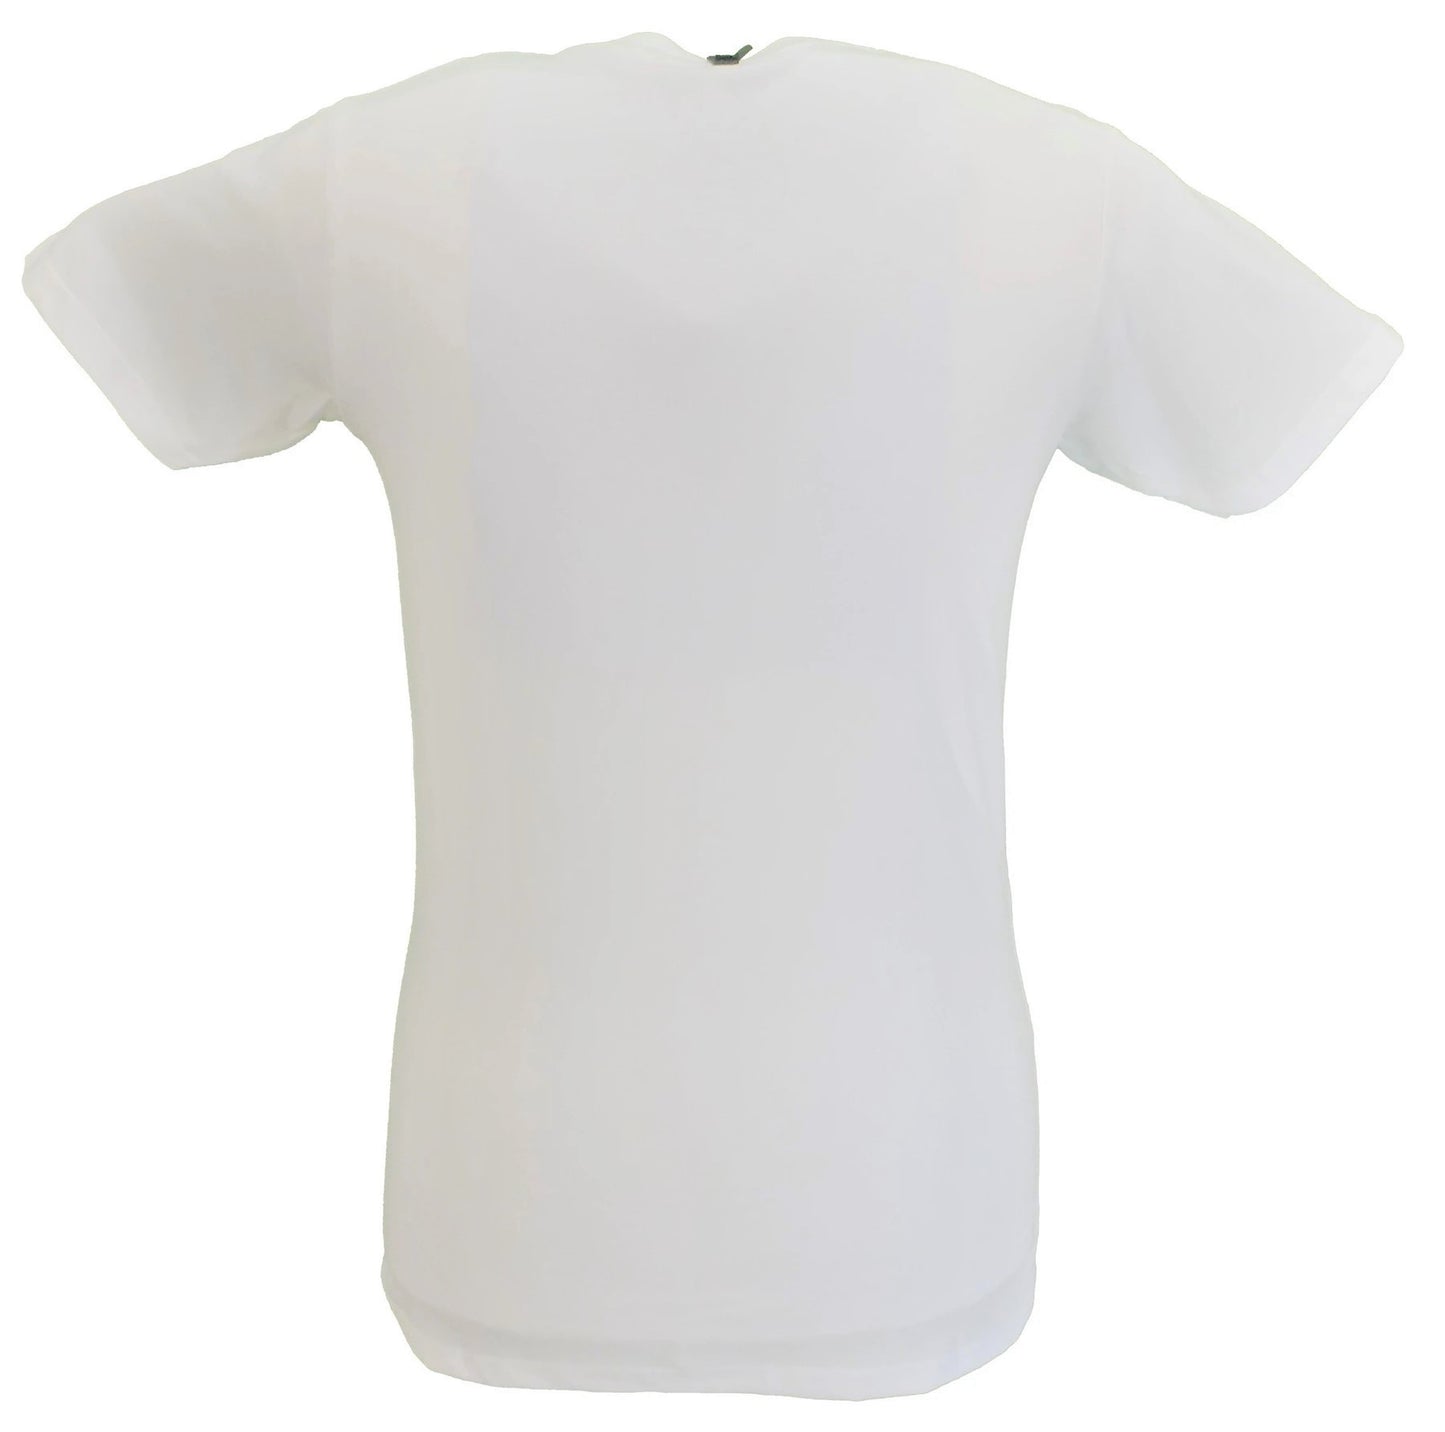 Mens White Official Madness Trilby Logo T Shirt